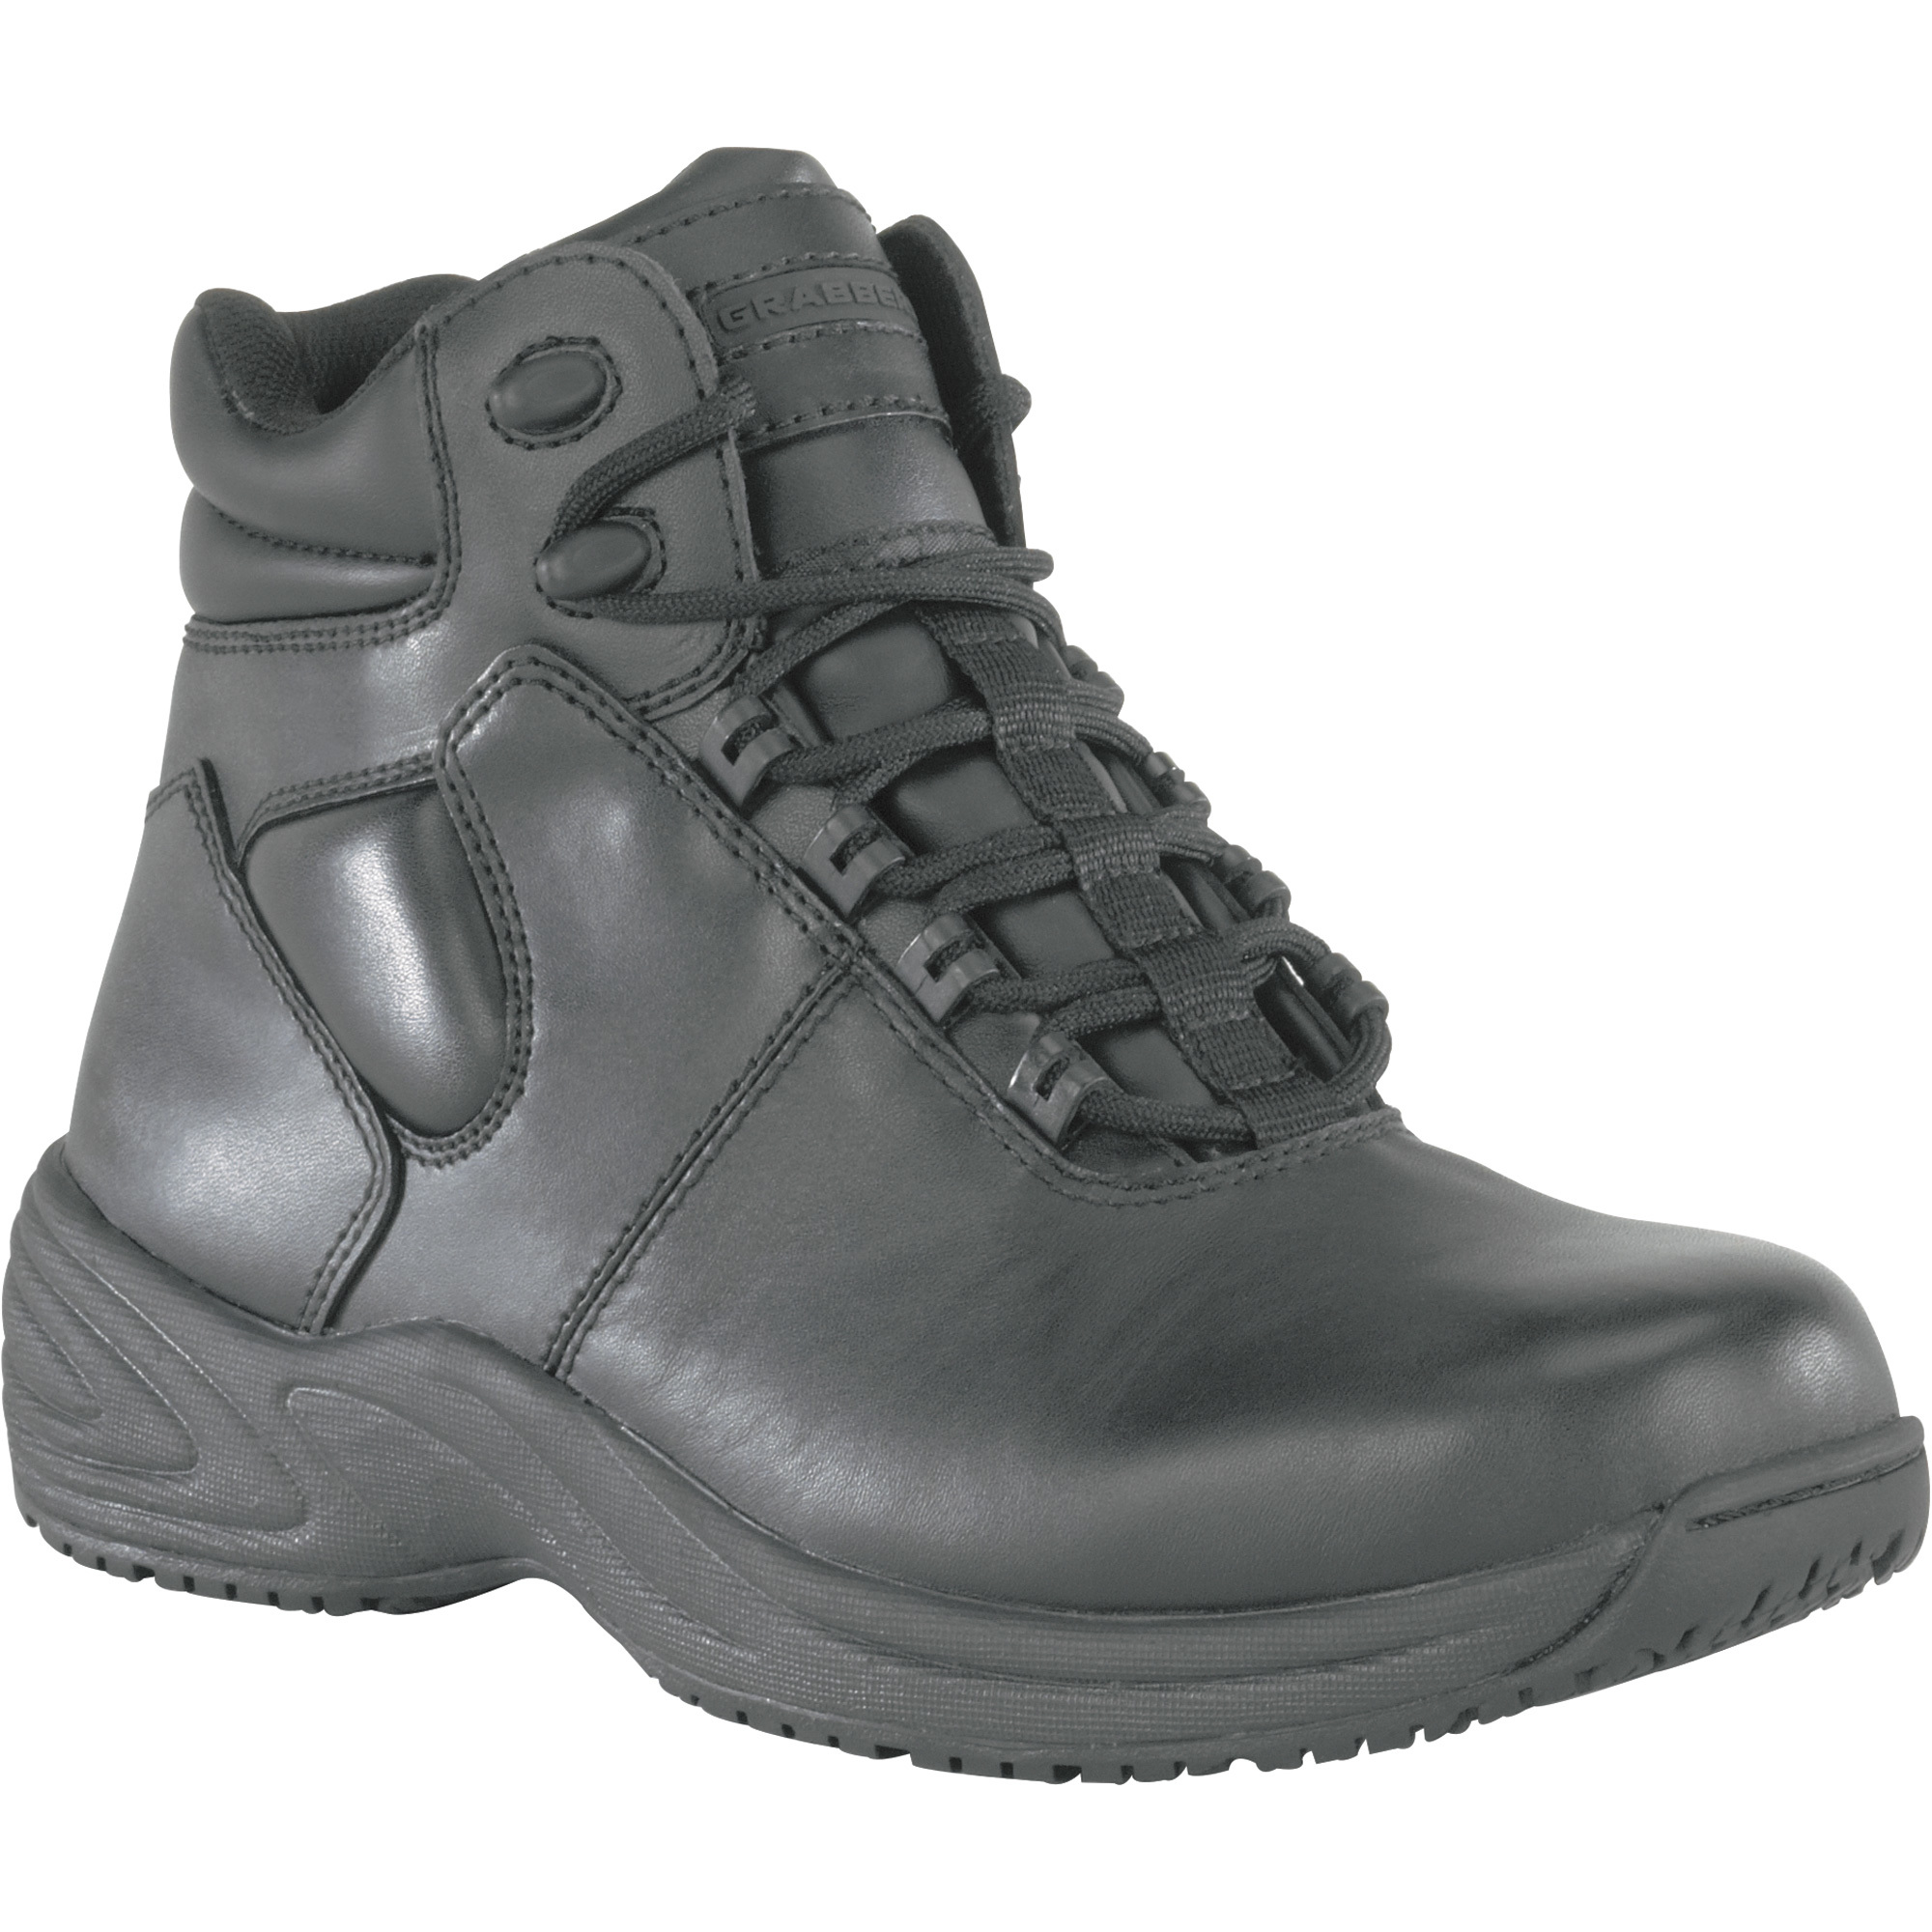 Grabbers Men's 6Inch Fastener Work Boots - Black, Size 8 1/2 Wide, Model G1240